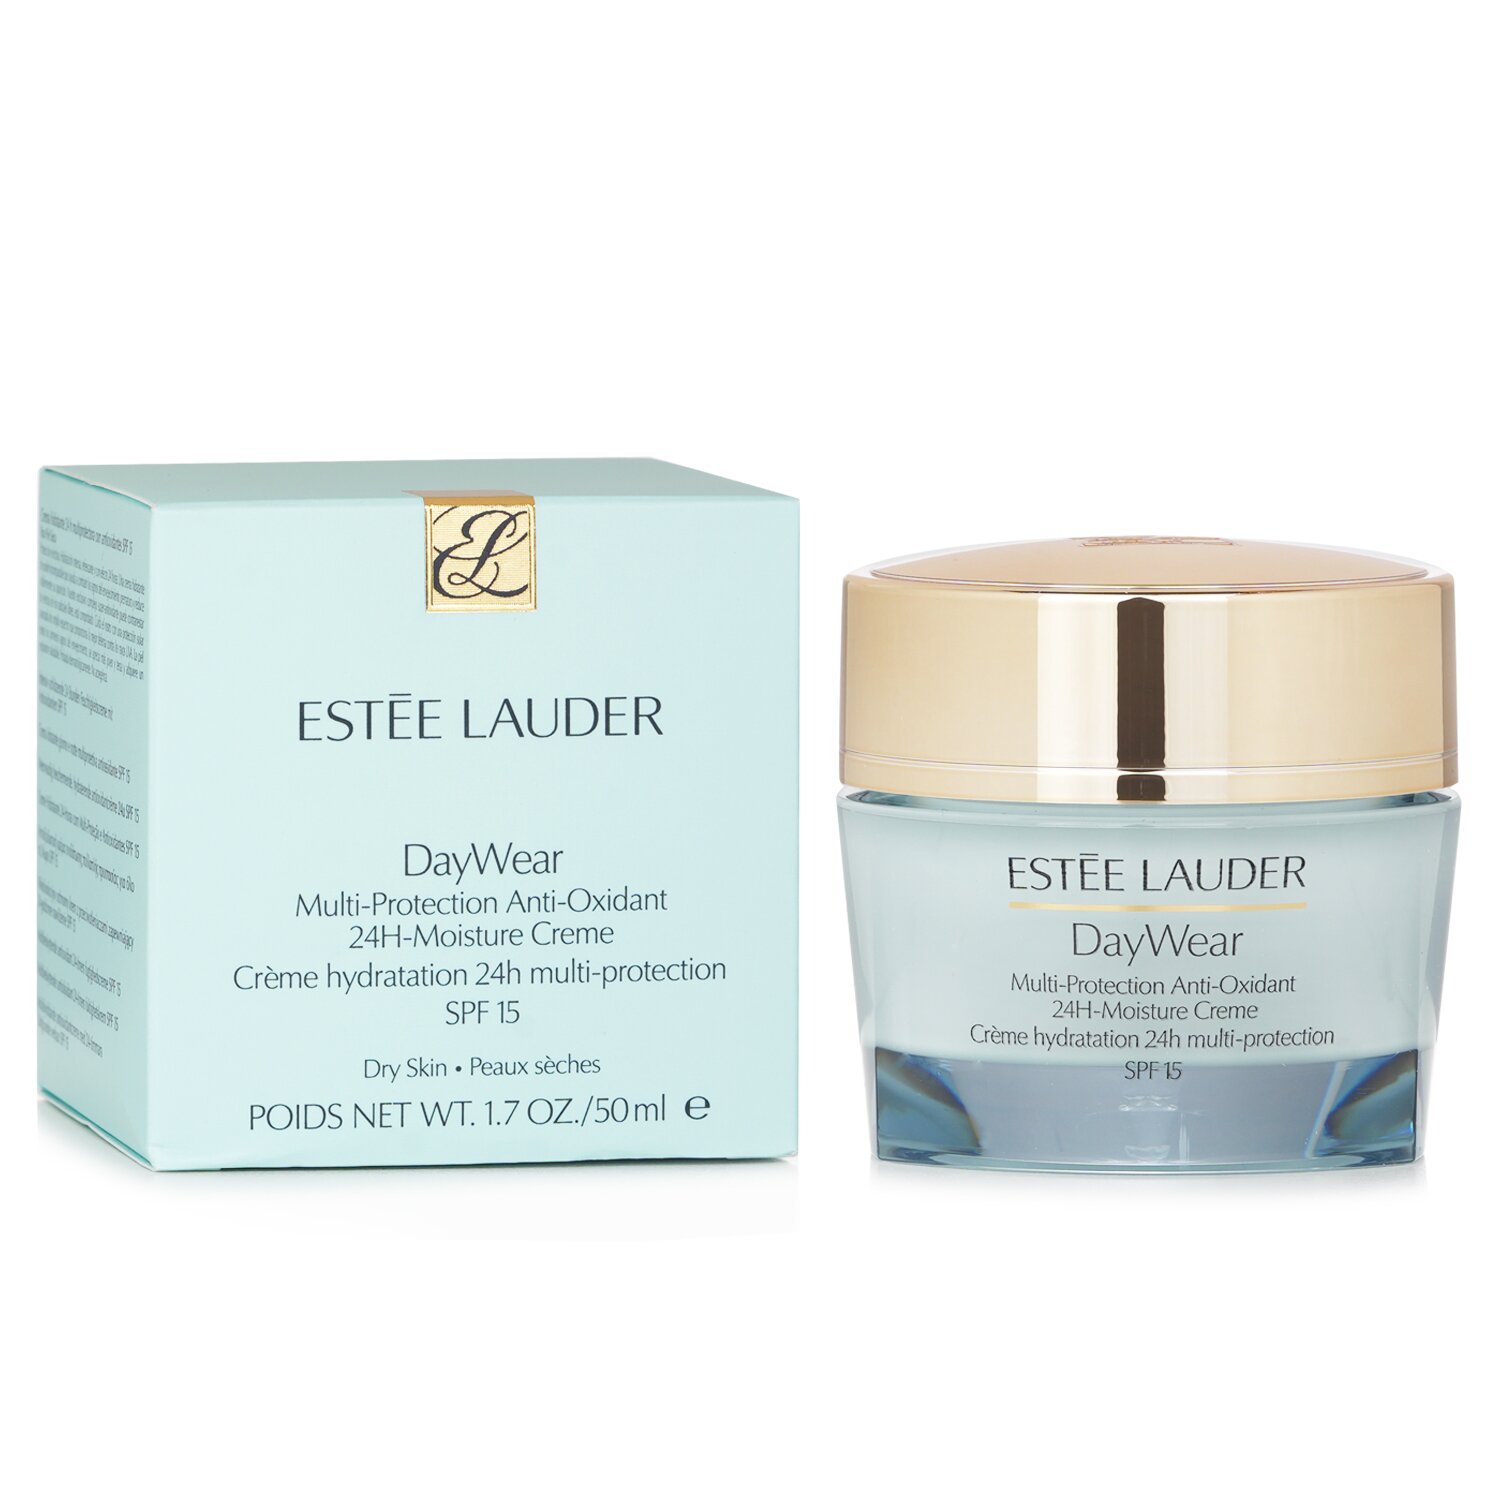 Estee Lauder DayWear Multi-Protection Anti-Oxidant 24H-Moisture Creme SPF 15 - Dry Skin 50ml/1.7oz